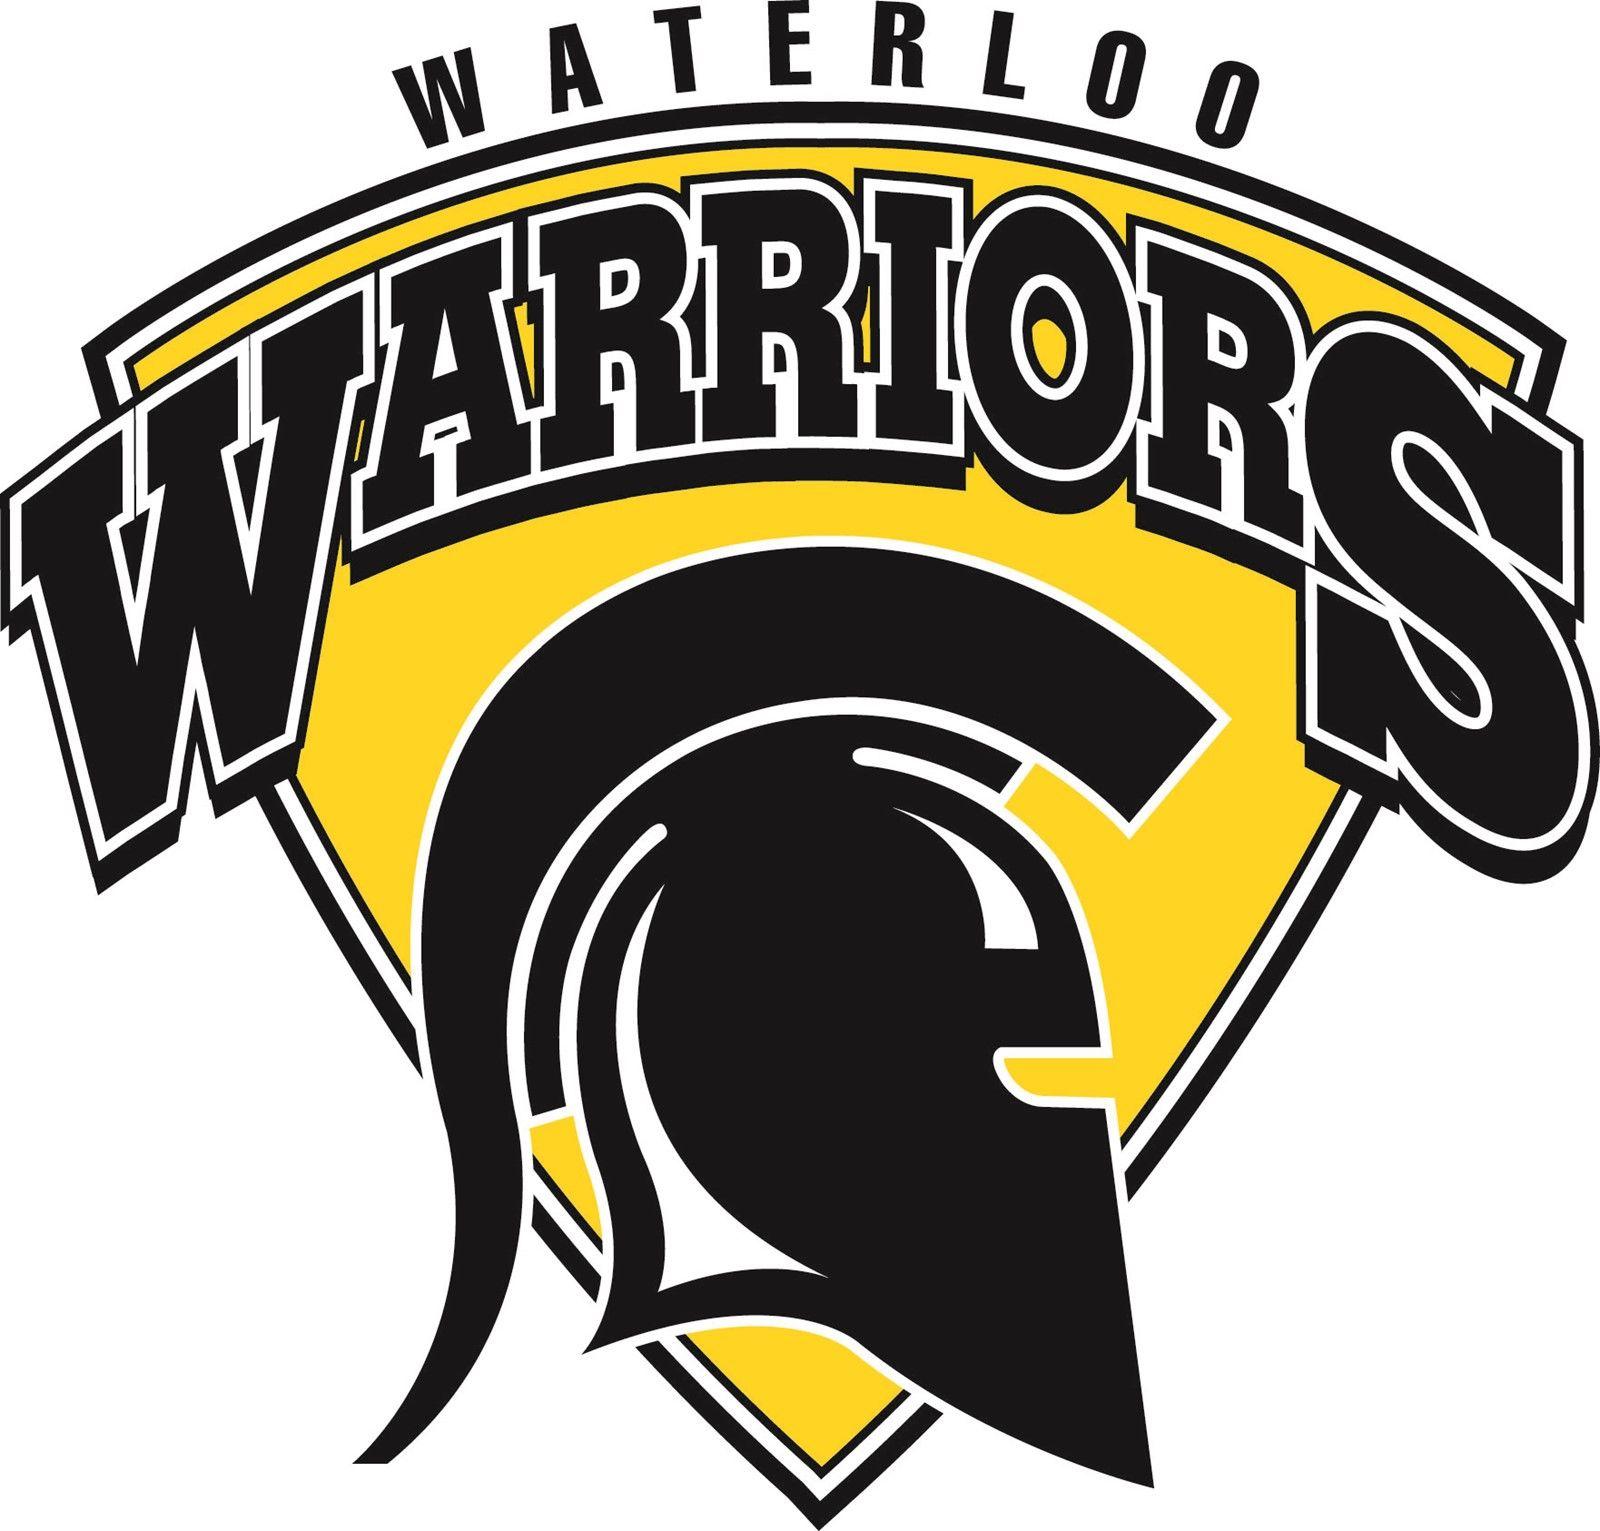 Warrior White Logo - University of Waterloo Athletics - Official Athletics Website